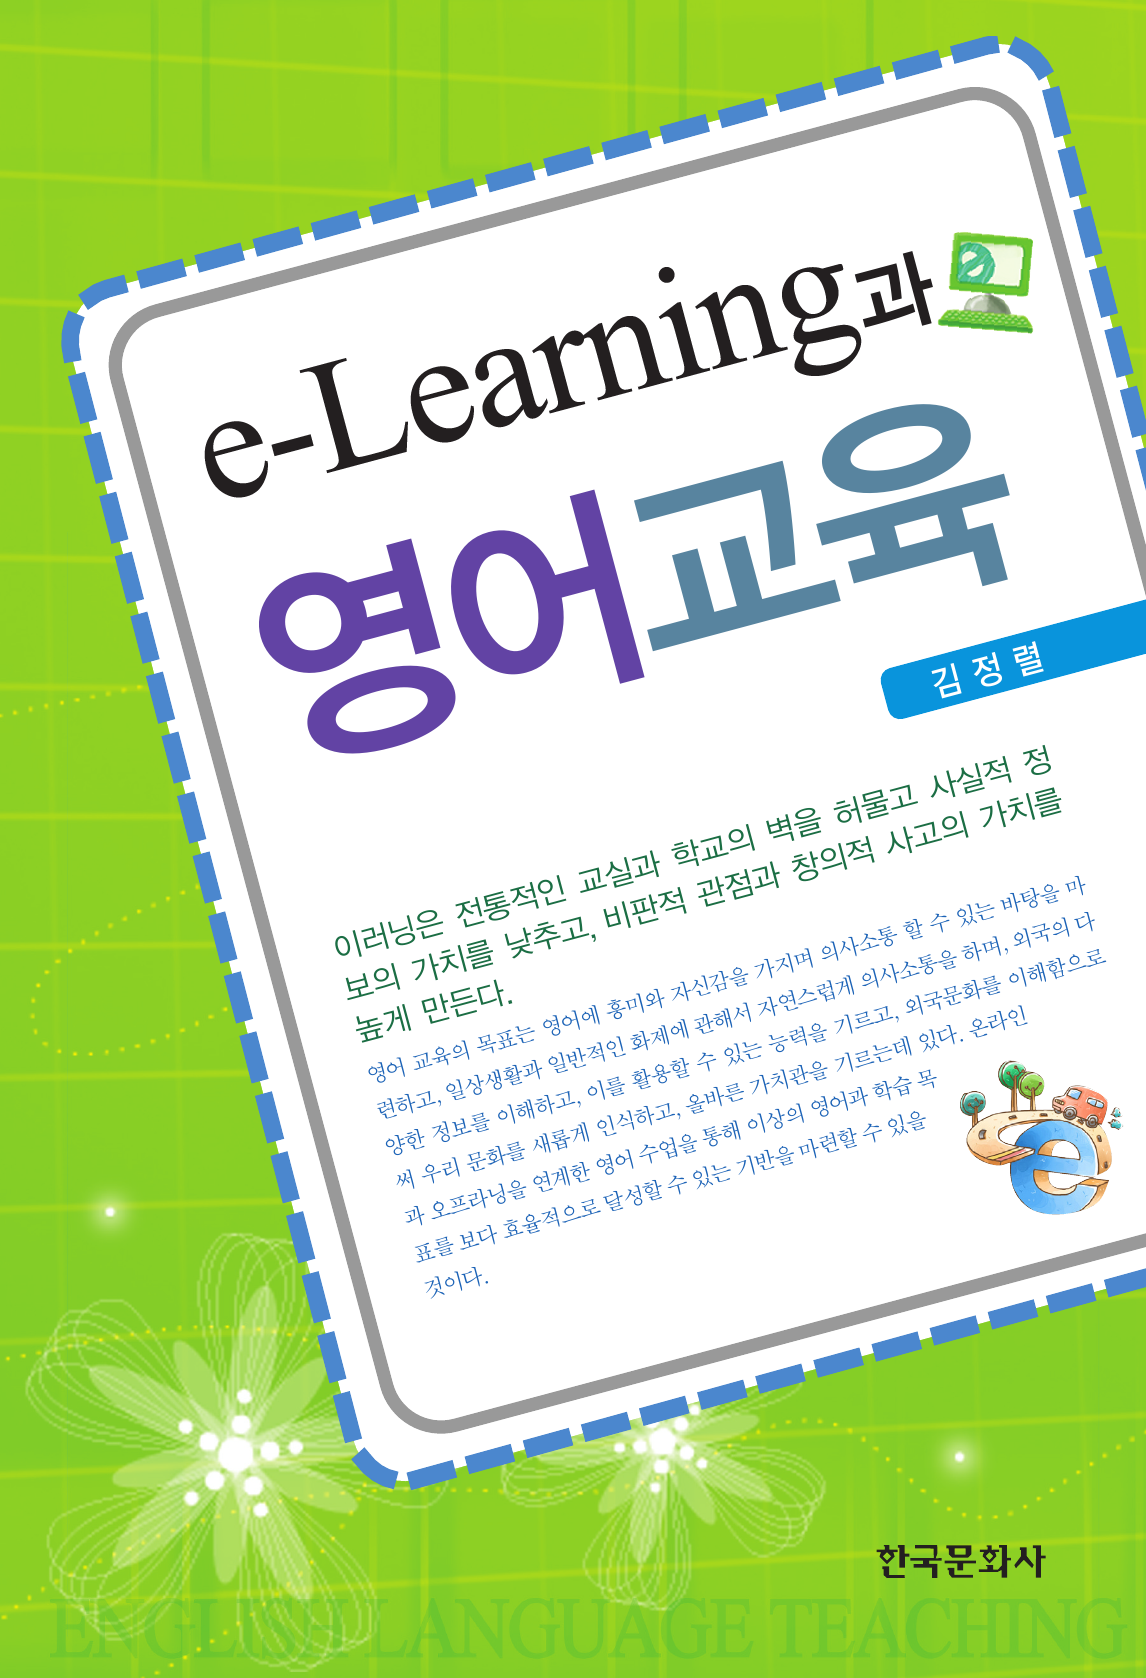 E-LEARNING과 영어교육